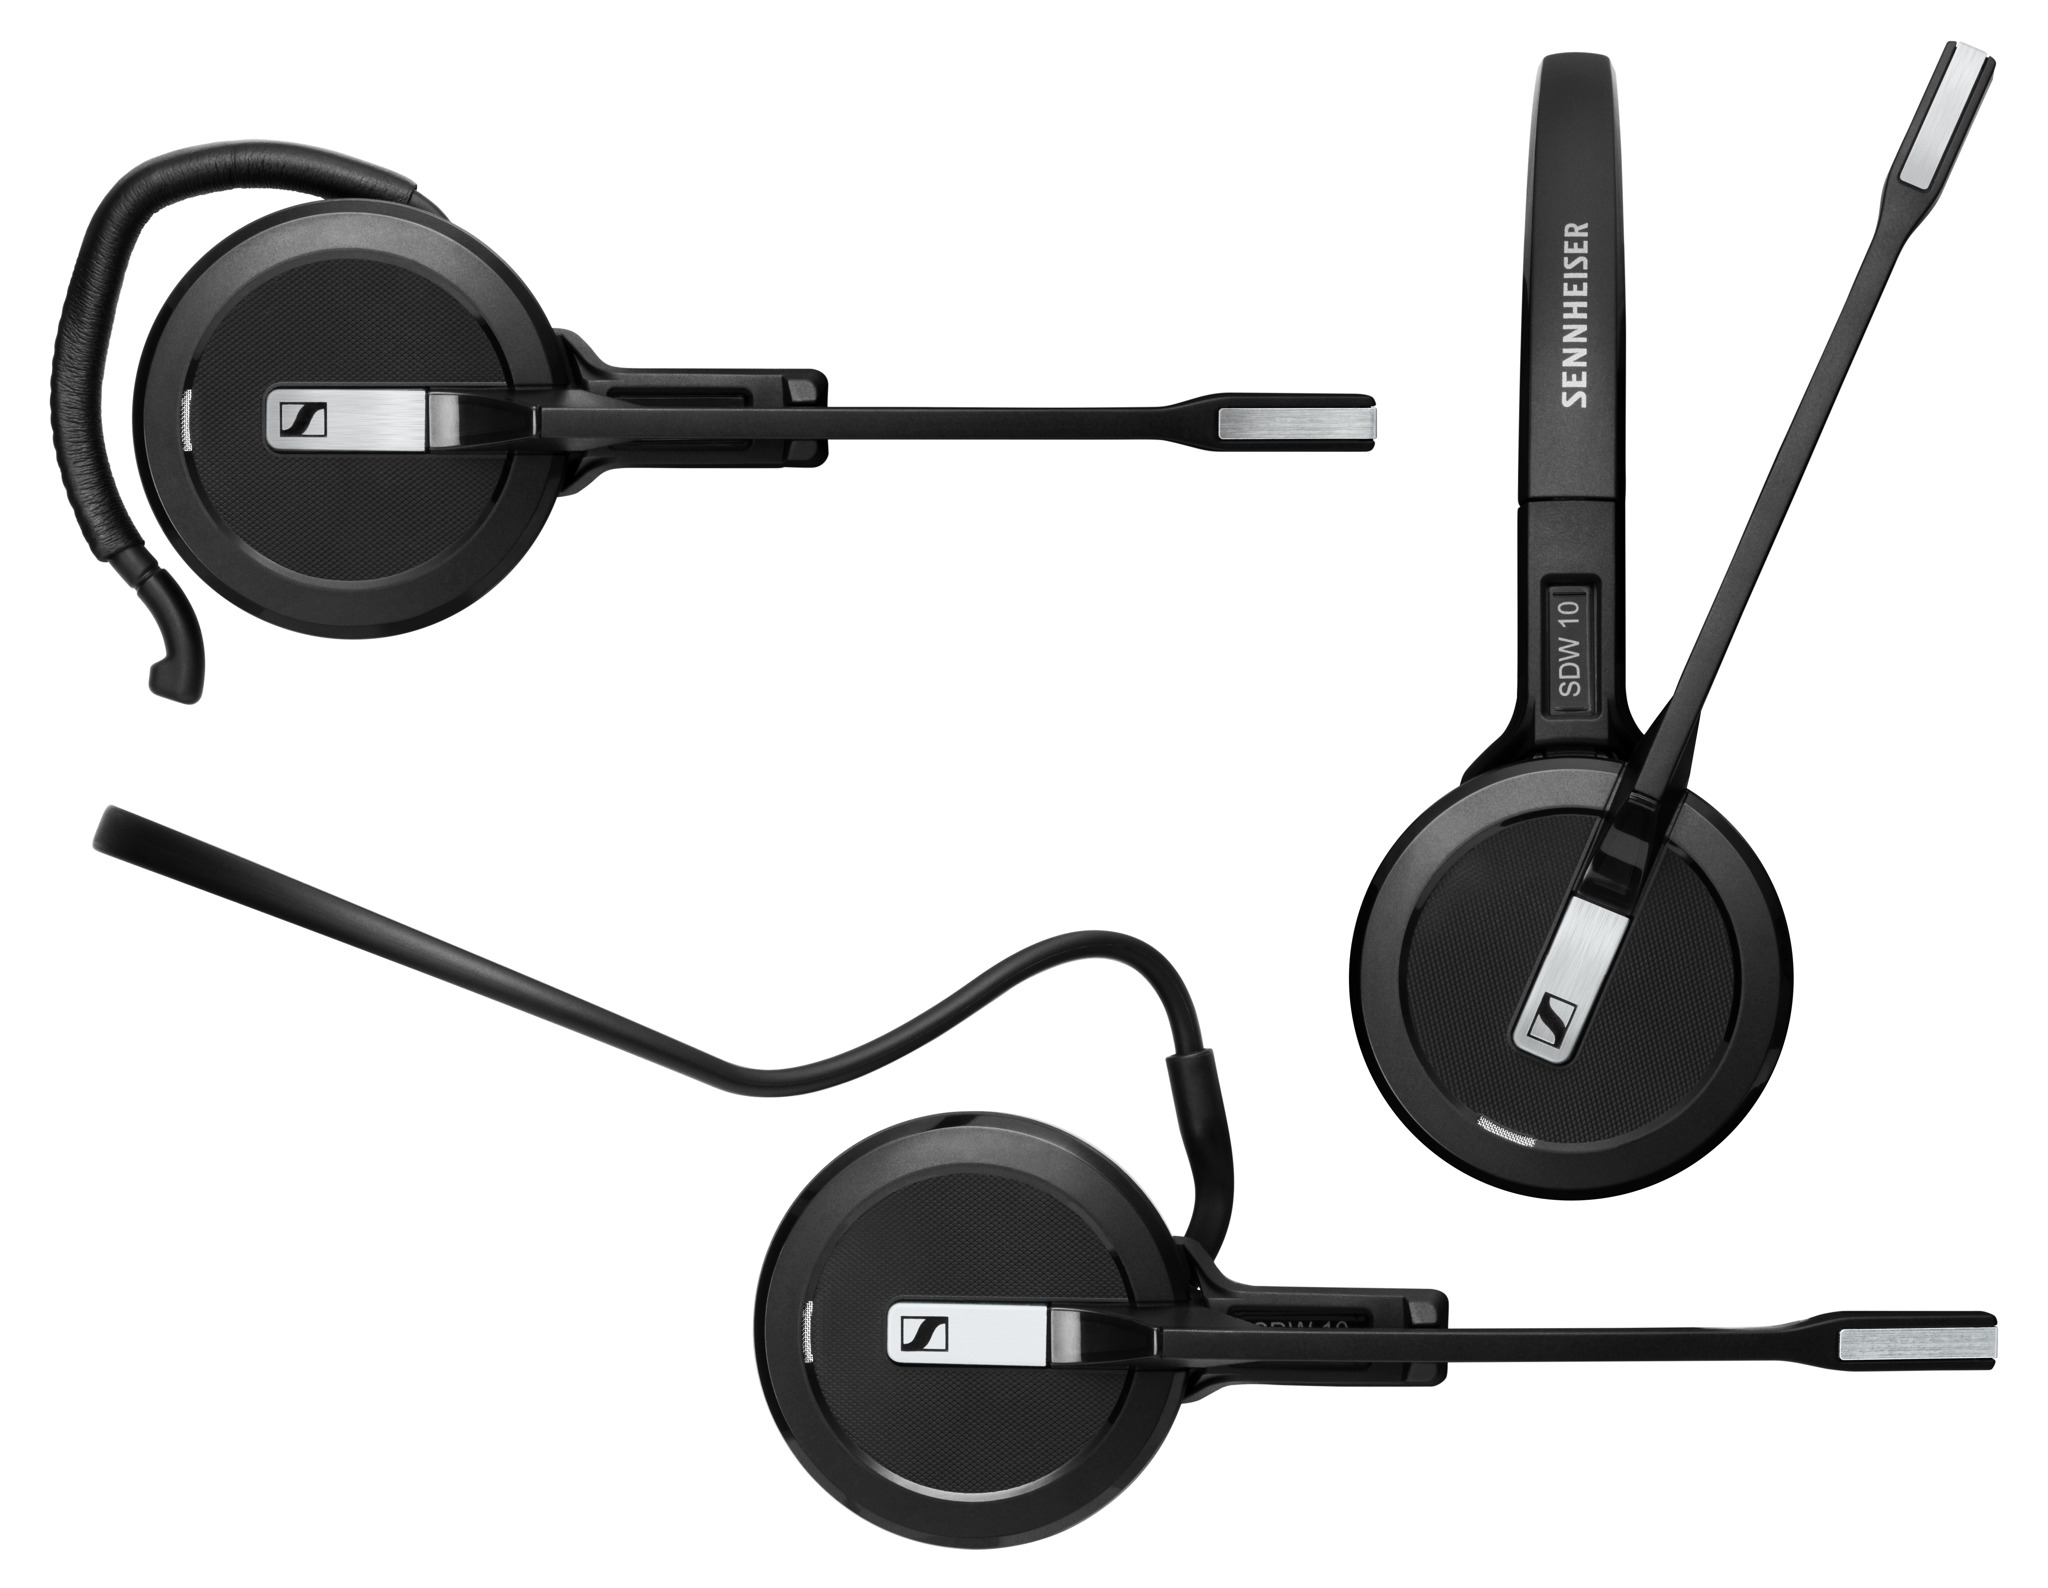 meet-the-future-prepared-with-sennheiser-s-new-sdw-5000-dect-headset-series